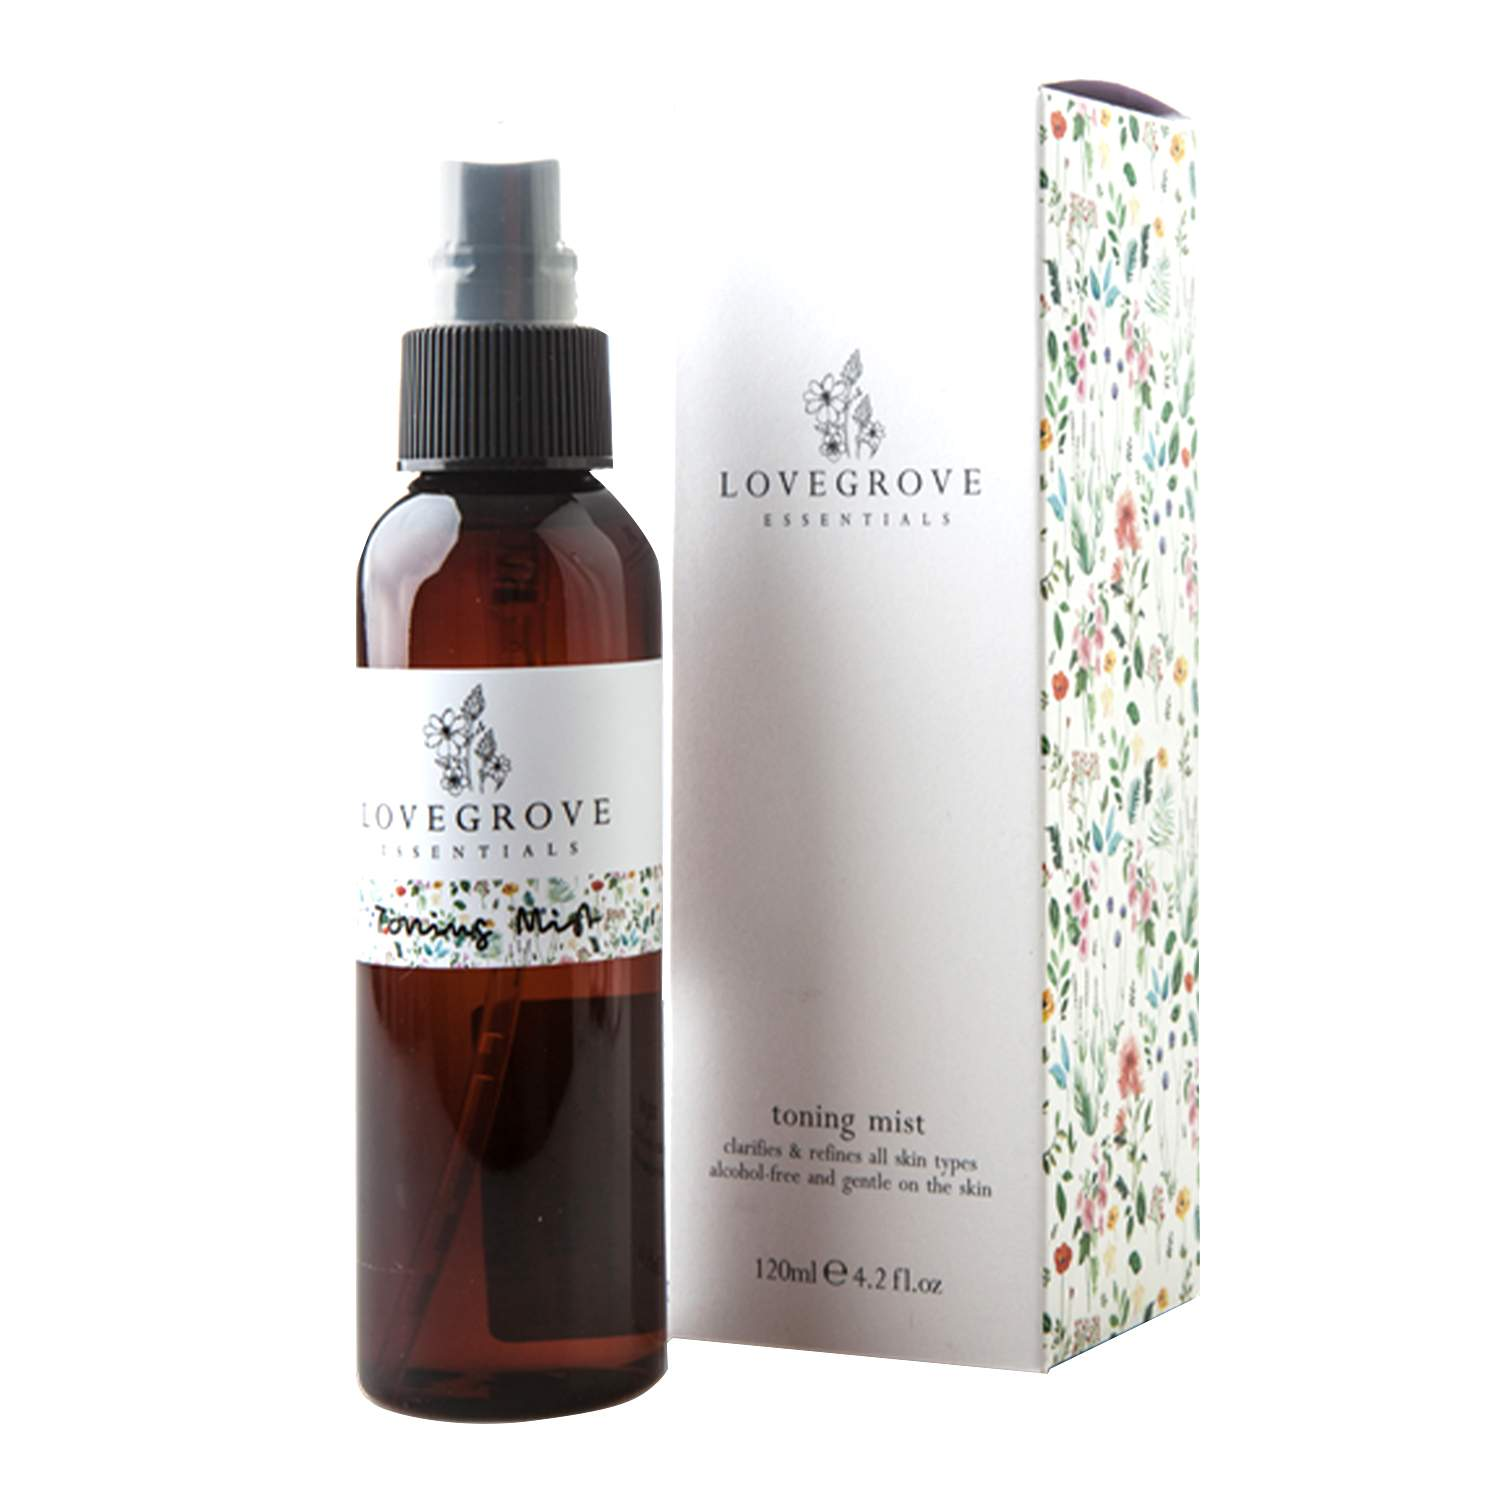 Lovegrove Essentials Toning Mist